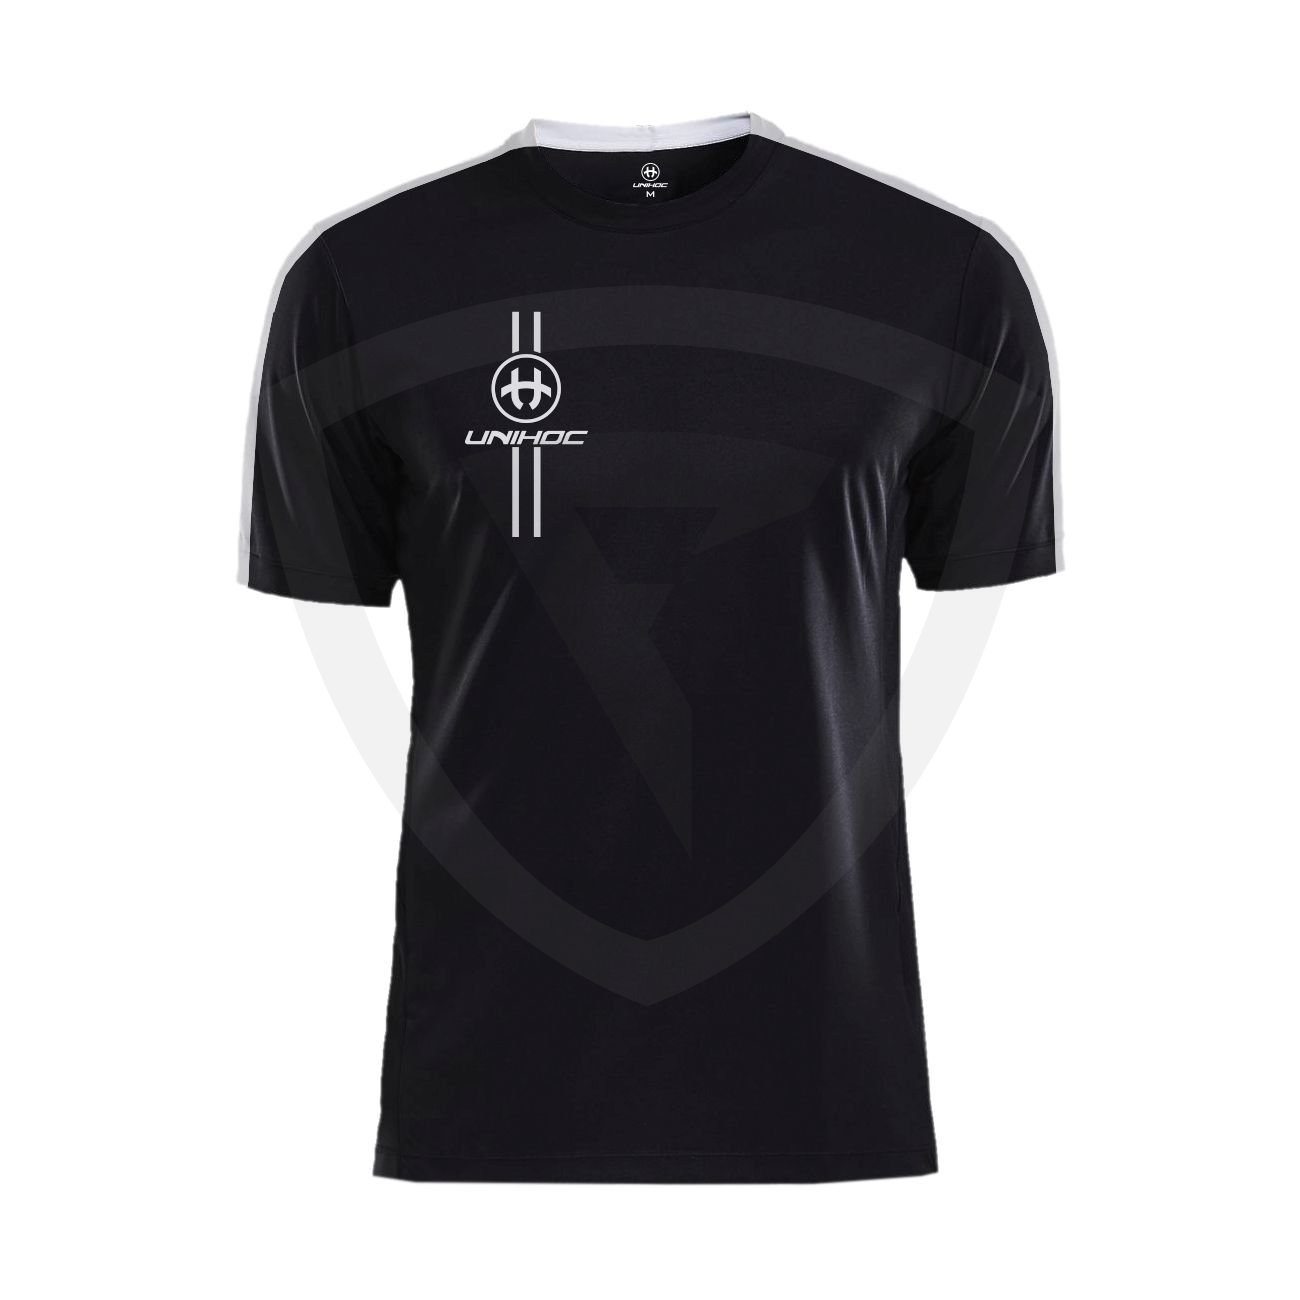 Unihoc Arrow T-shirt Black-White SR XL černá-bílá